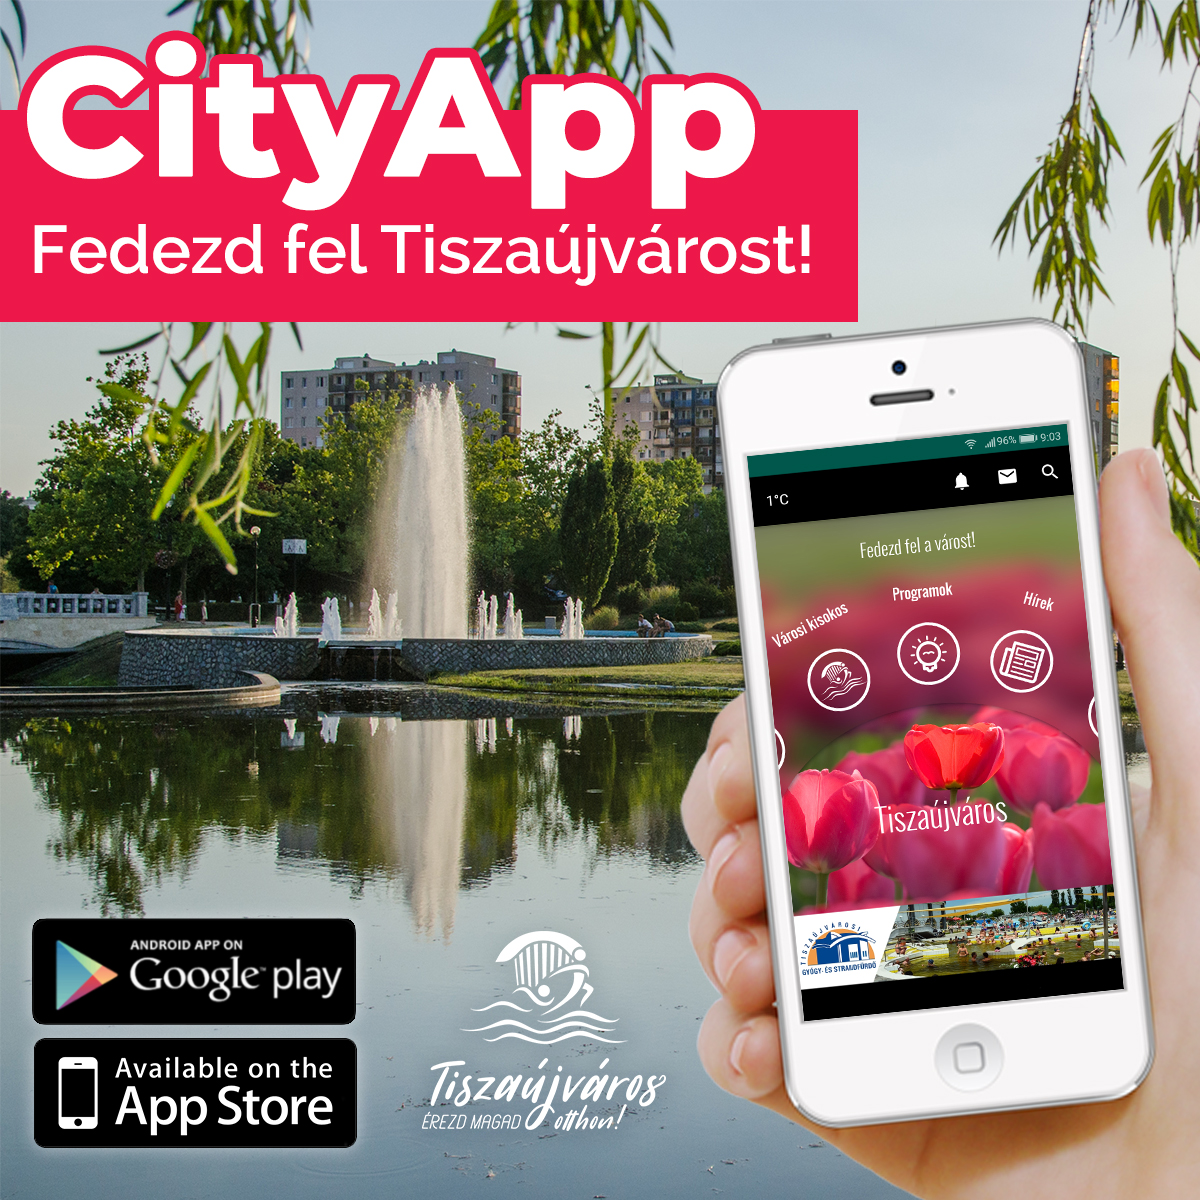 Cityapp web